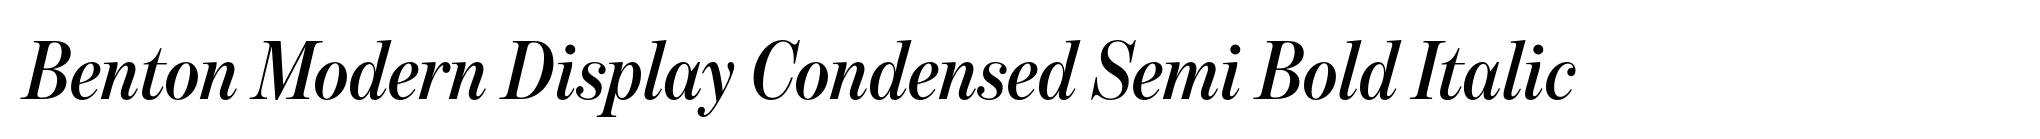 Benton Modern Display Condensed Semi Bold Italic image